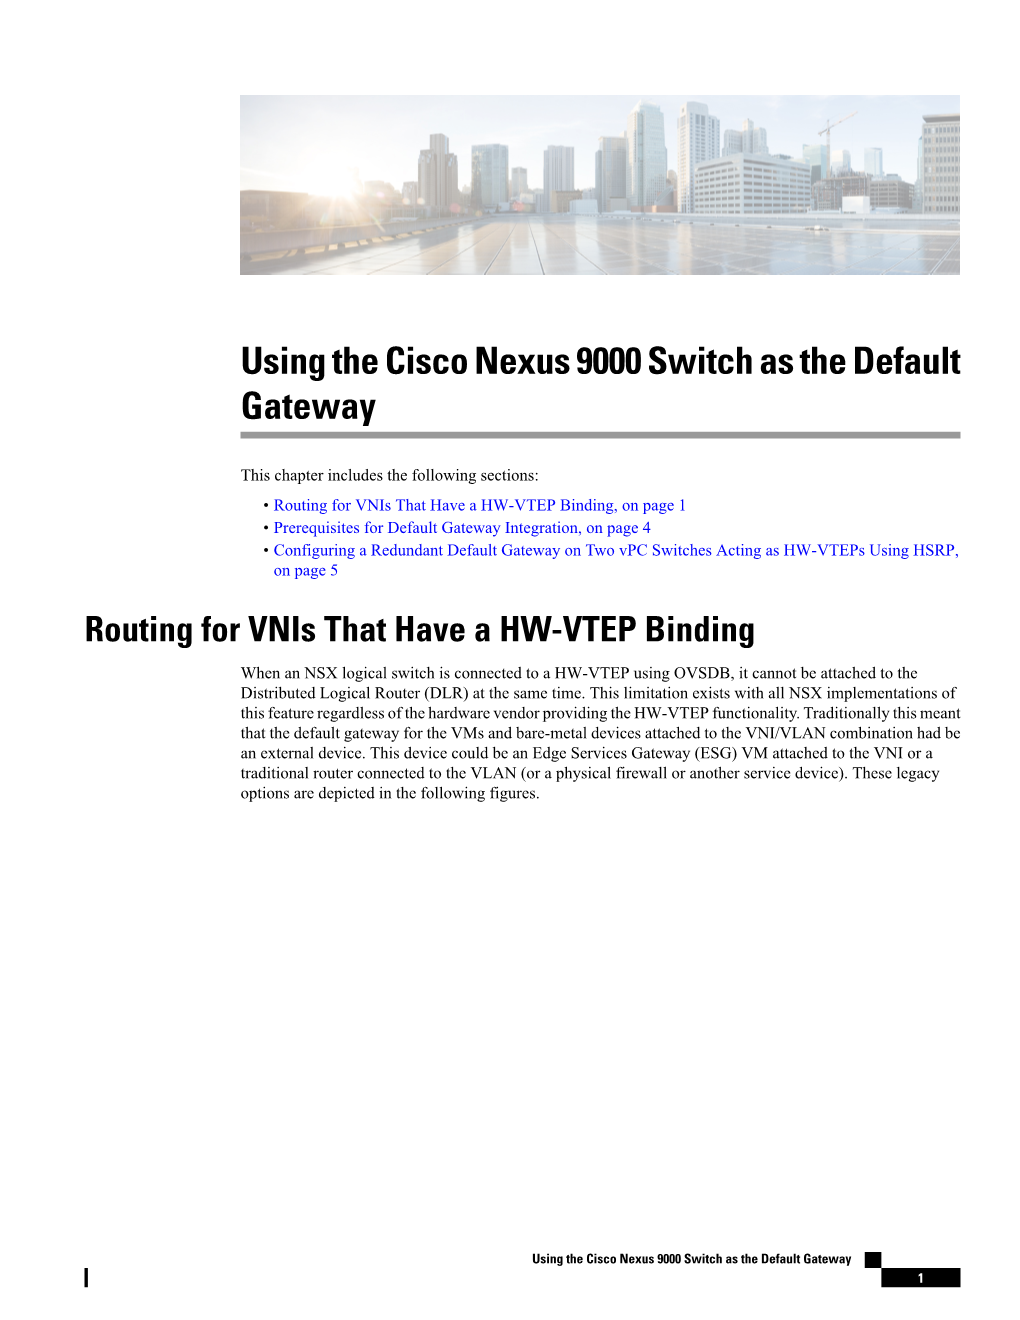 Using the Cisco Nexus 9000 Switch As the Default Gateway